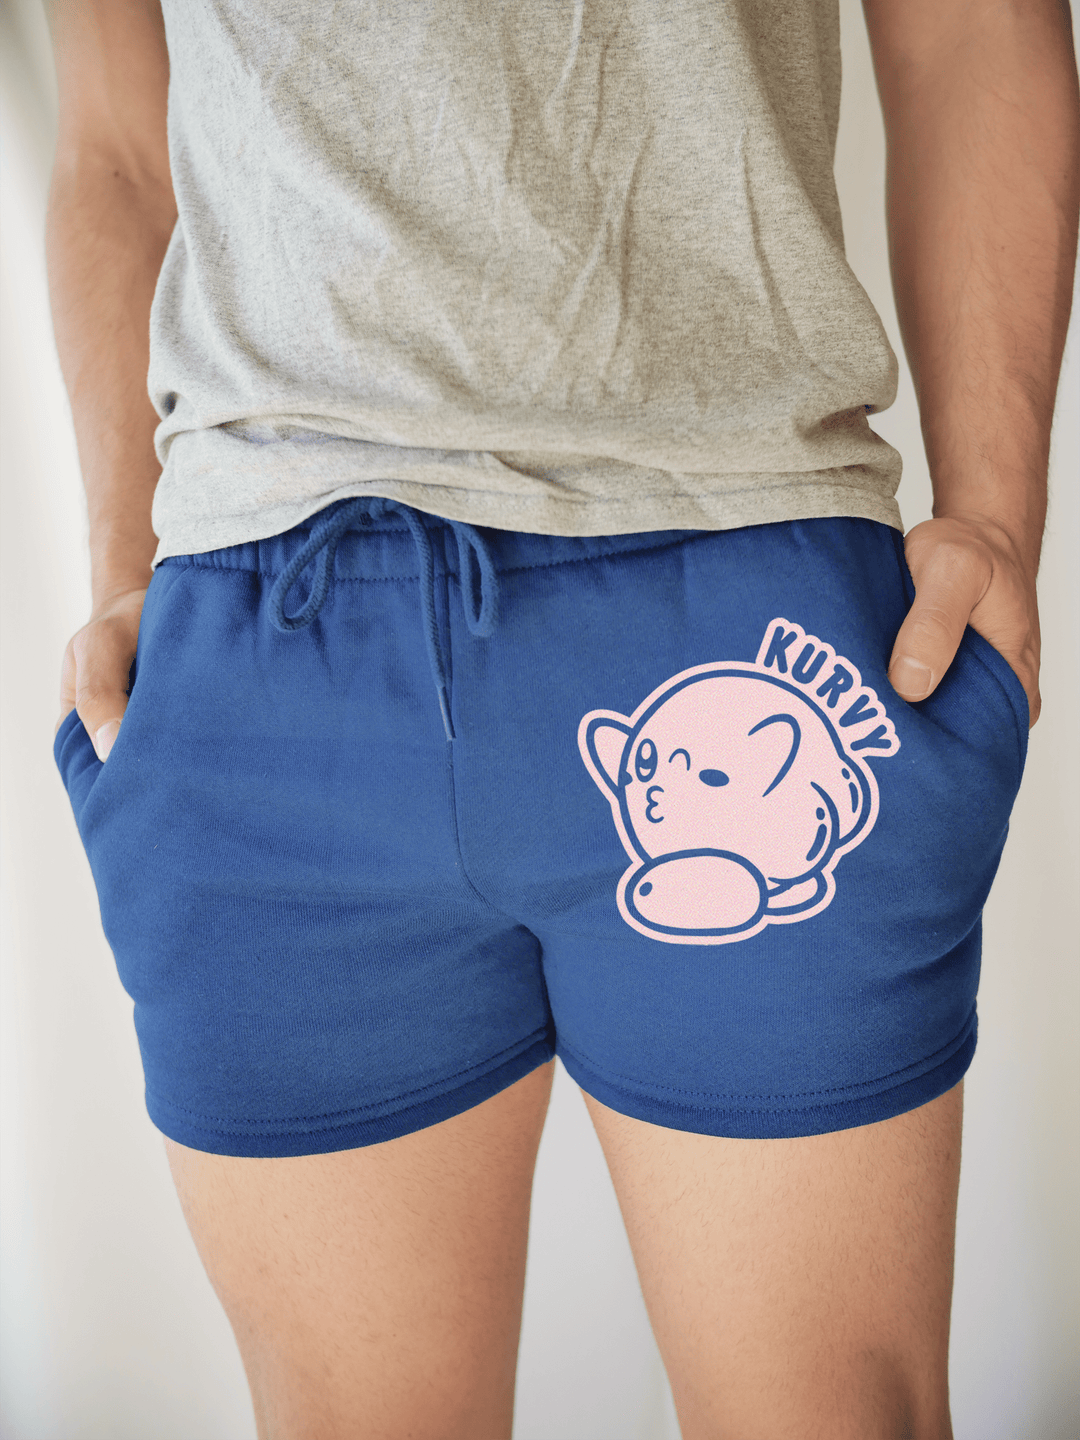 PixelThat Punderwear Shorts Royal Blue / S / Front Kurvy Men's Gym Shorts